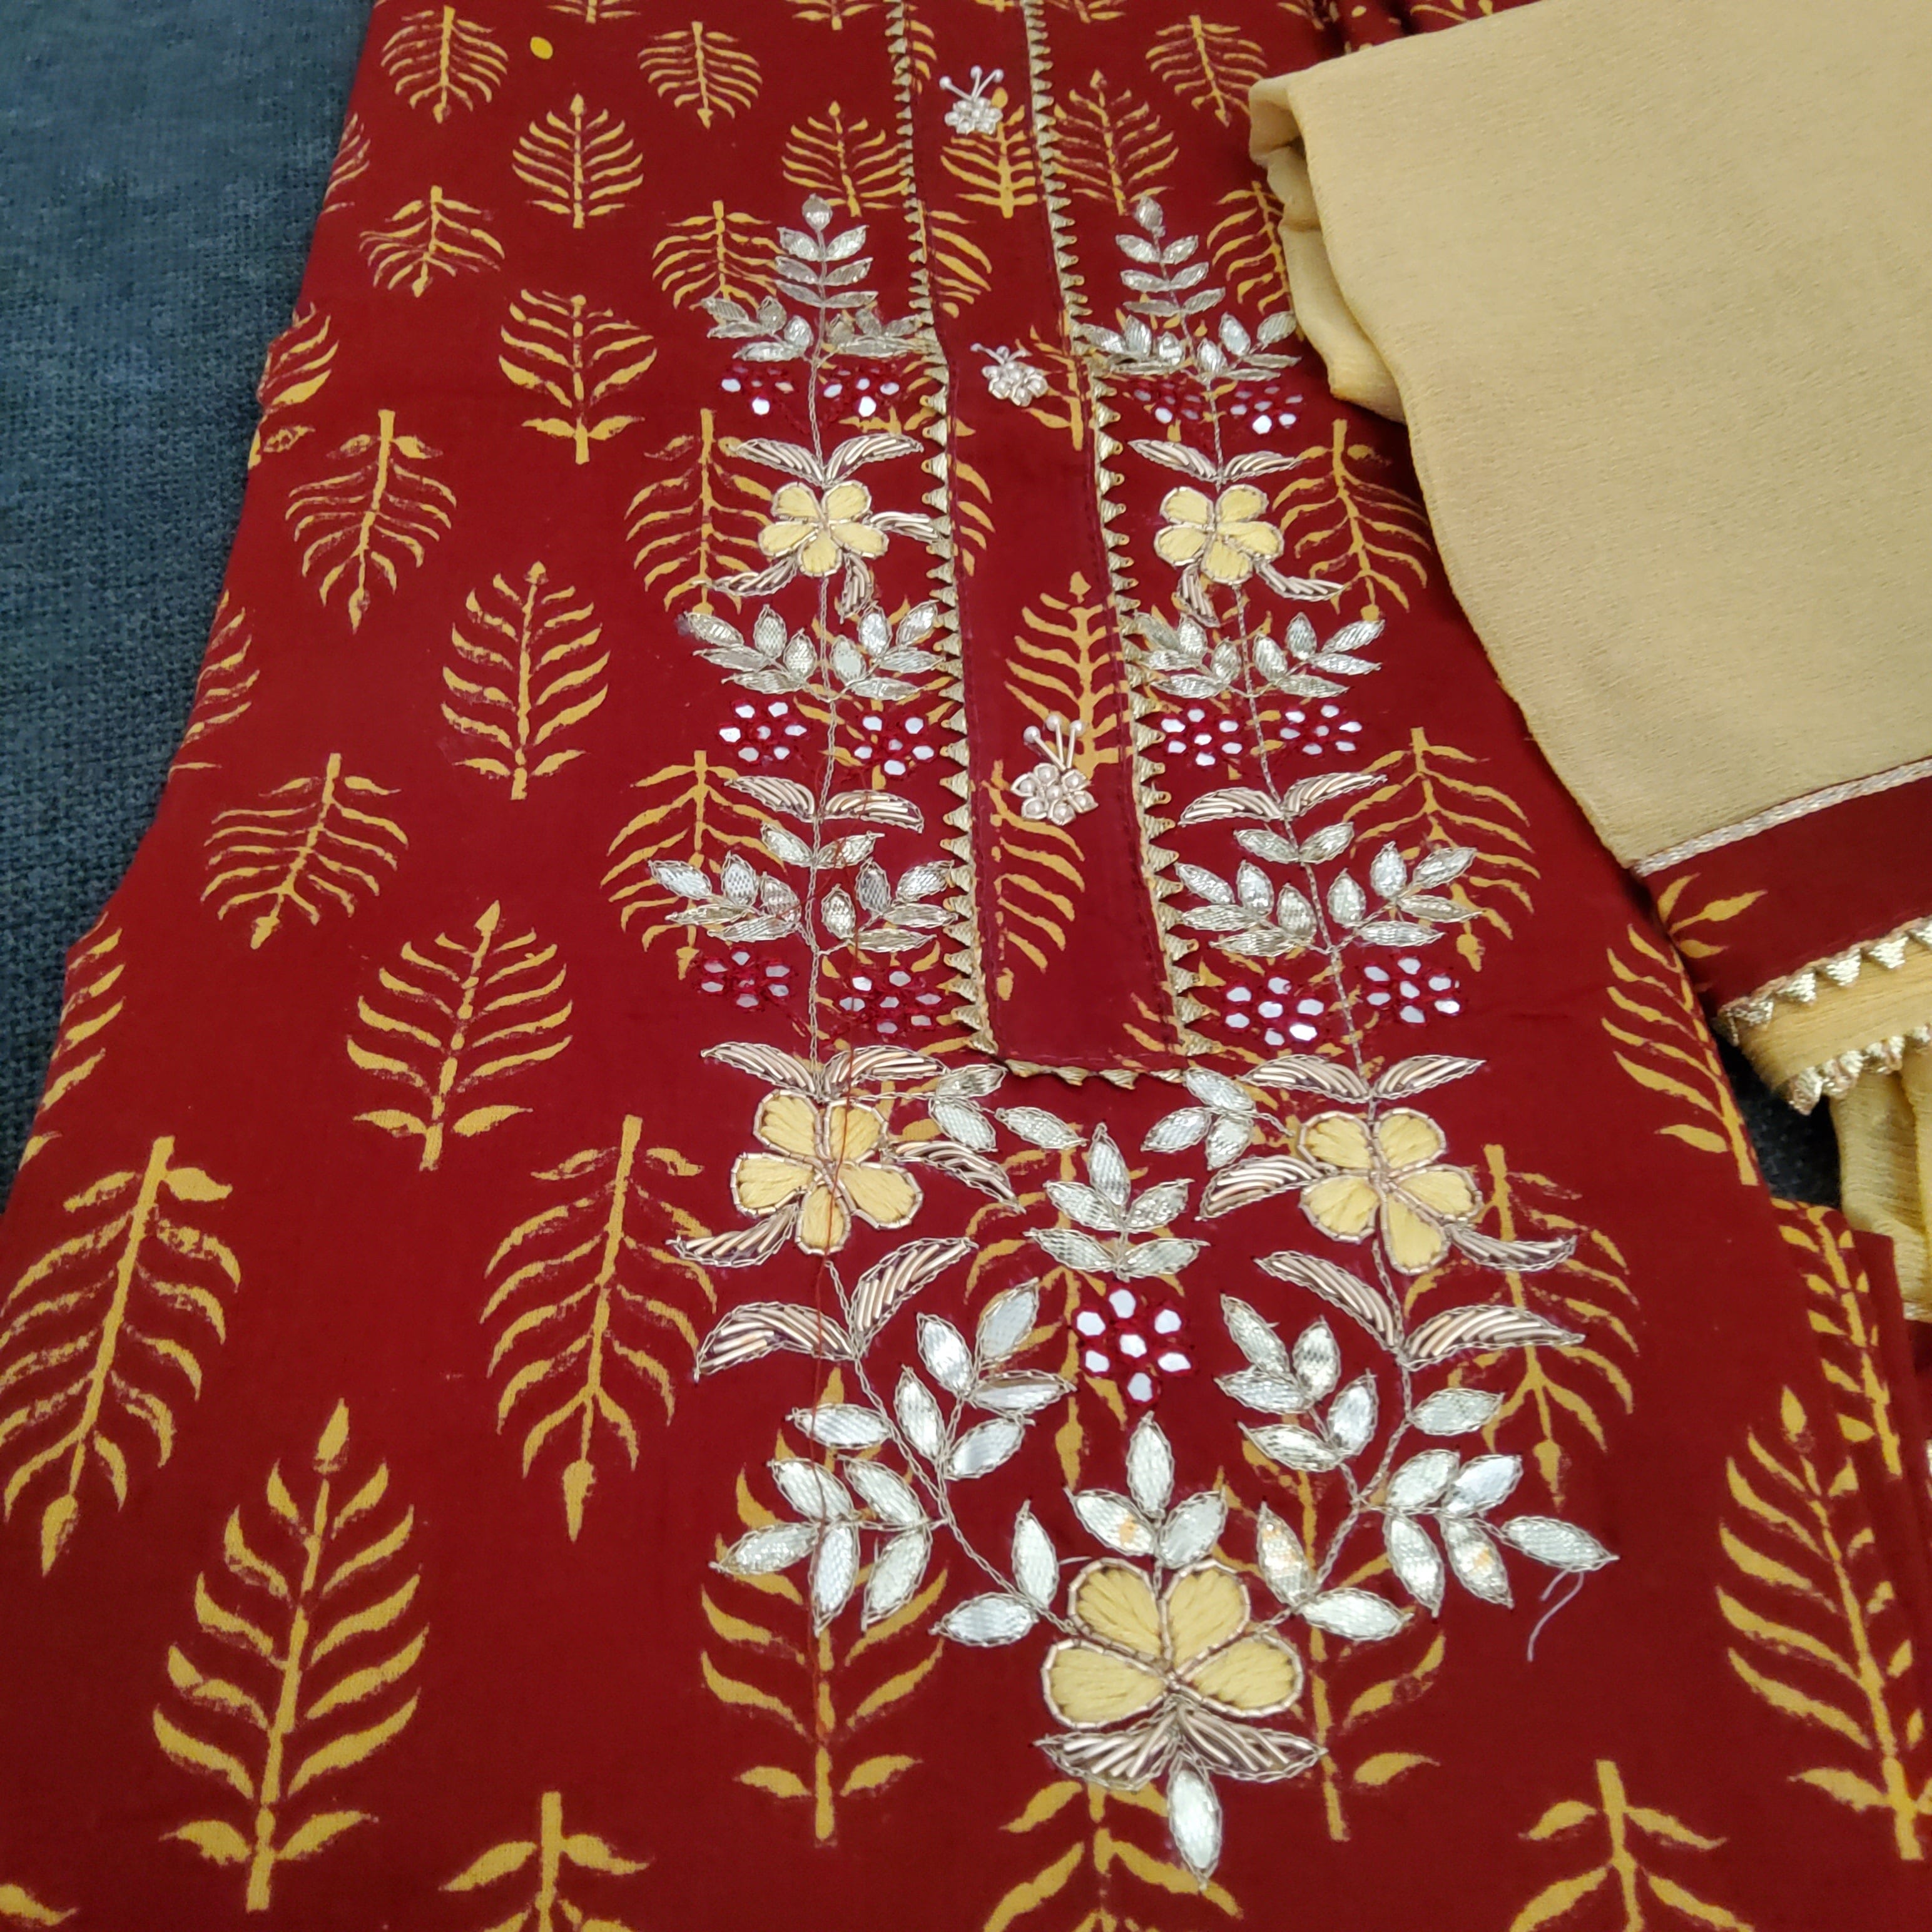 Ladies dress material online Marshall Islands: Wholesale Price